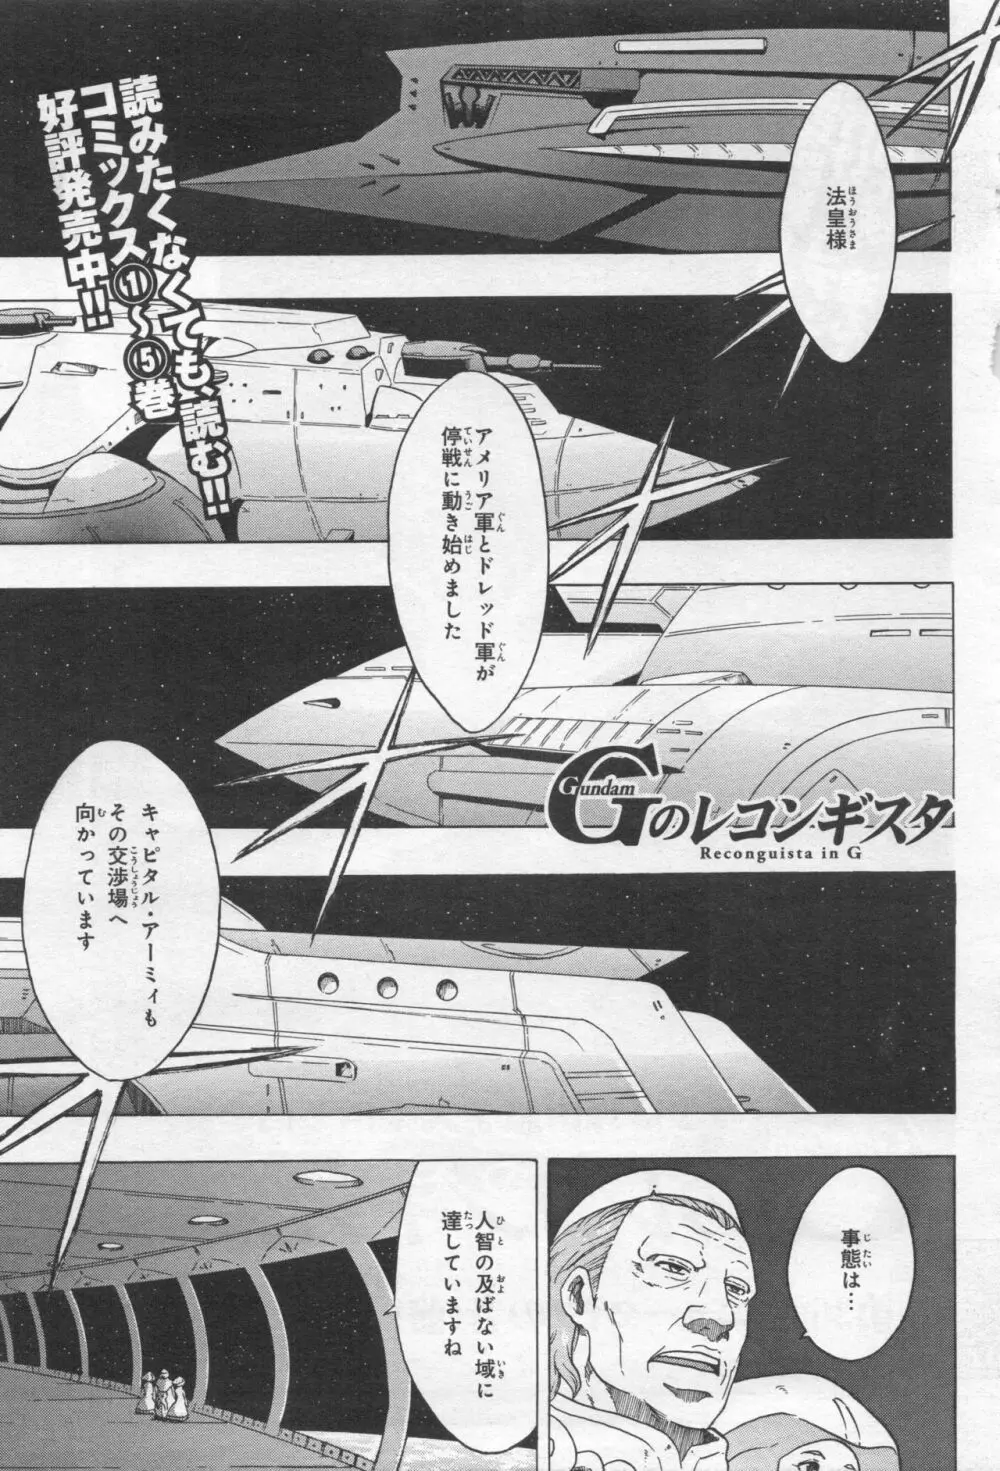 Gundam Ace – October 2019 310ページ